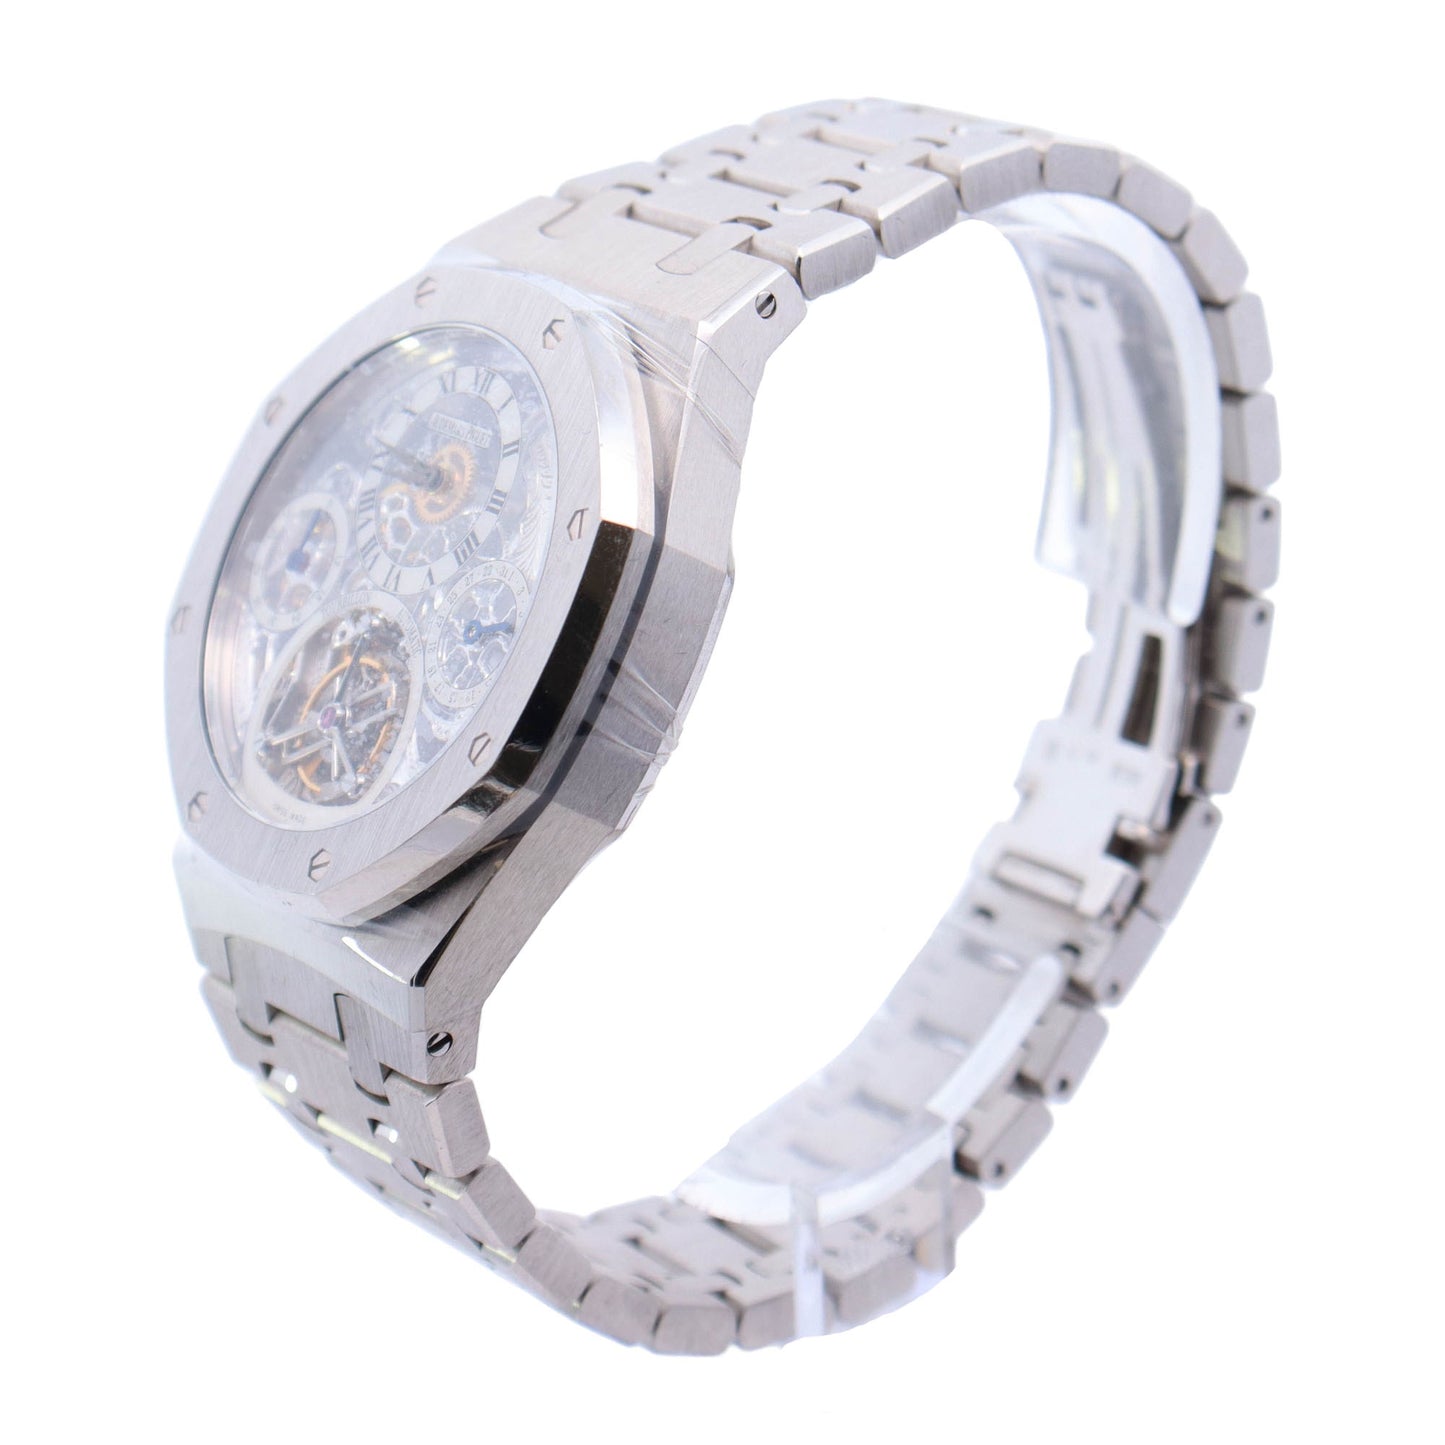 Audemars Piguet Royal Oak Tourbillon Platinum 40mm Skeleton Roman Dial Watch Reference# 25902PT.OO.1110PT.01 - Happy Jewelers Fine Jewelry Lifetime Warranty